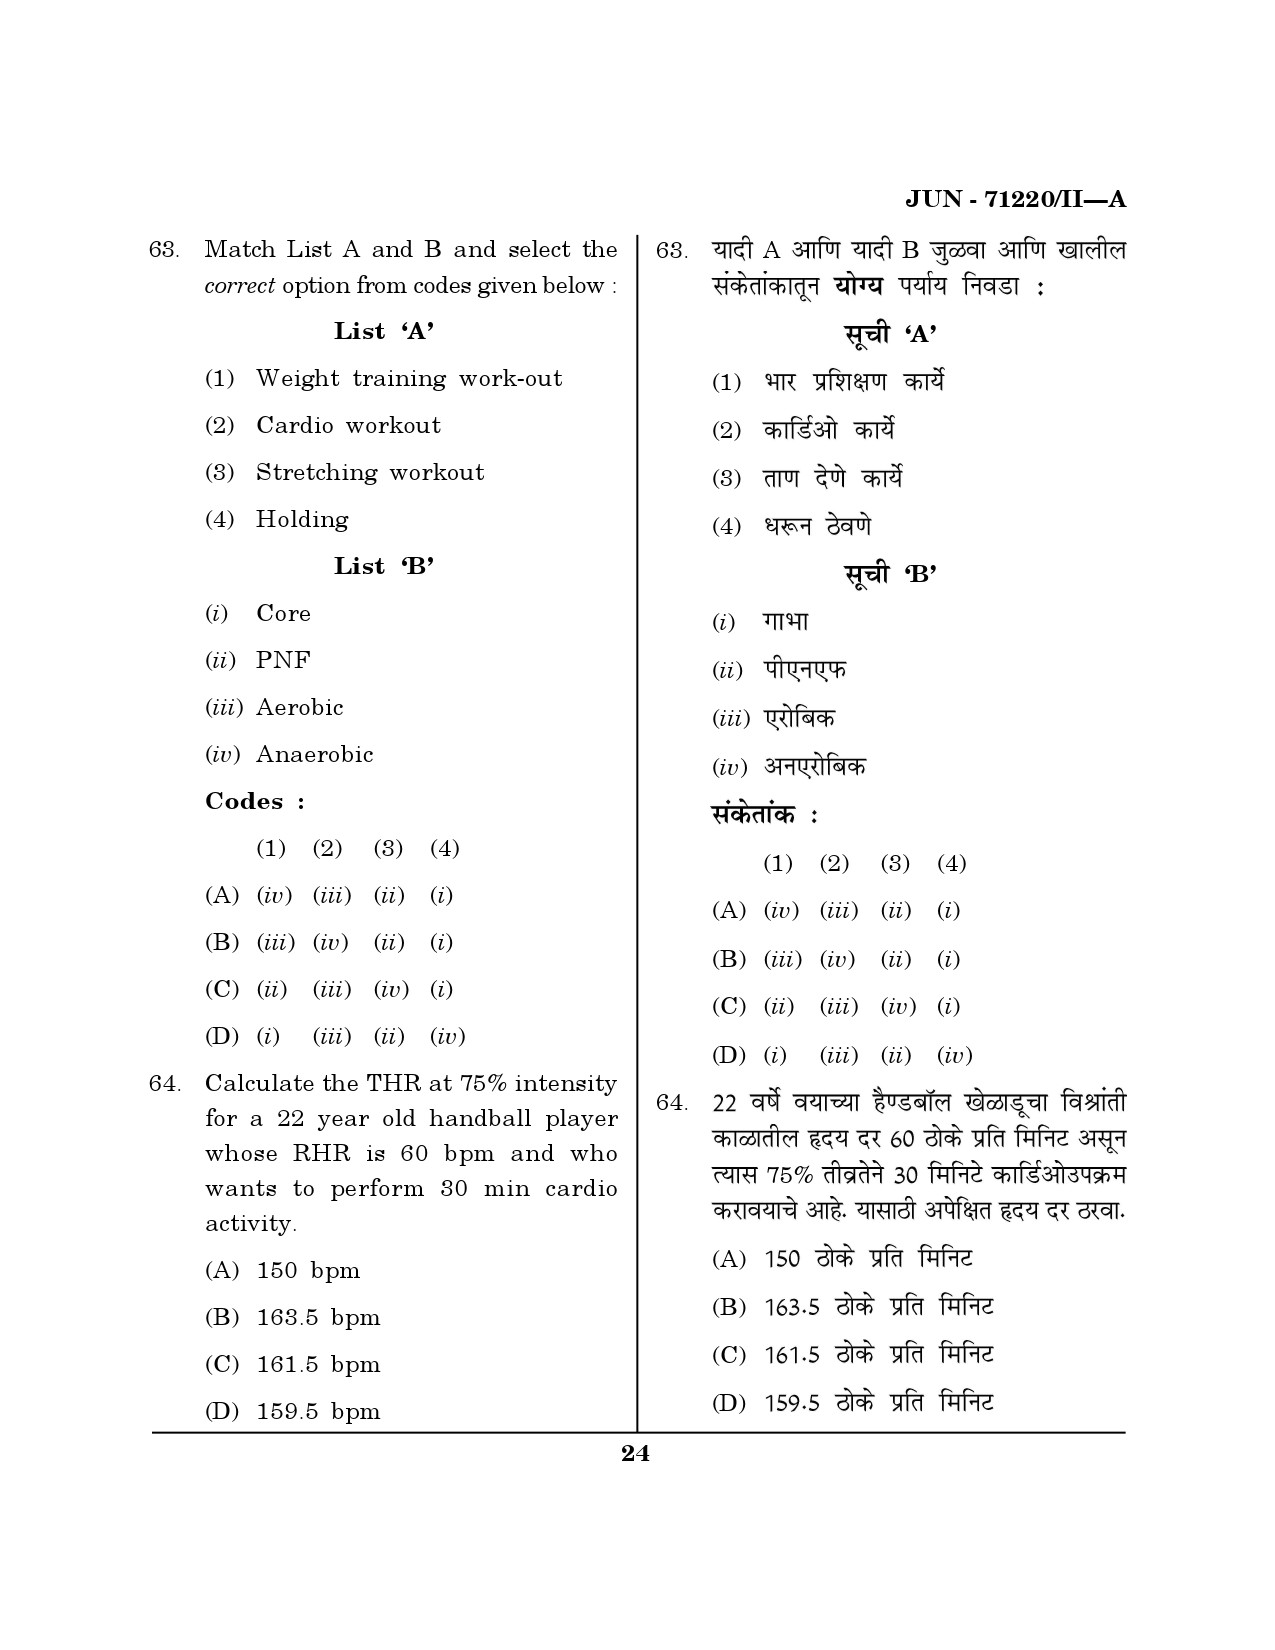 Maharashtra SET Physical Education Question Paper II June 2020 23